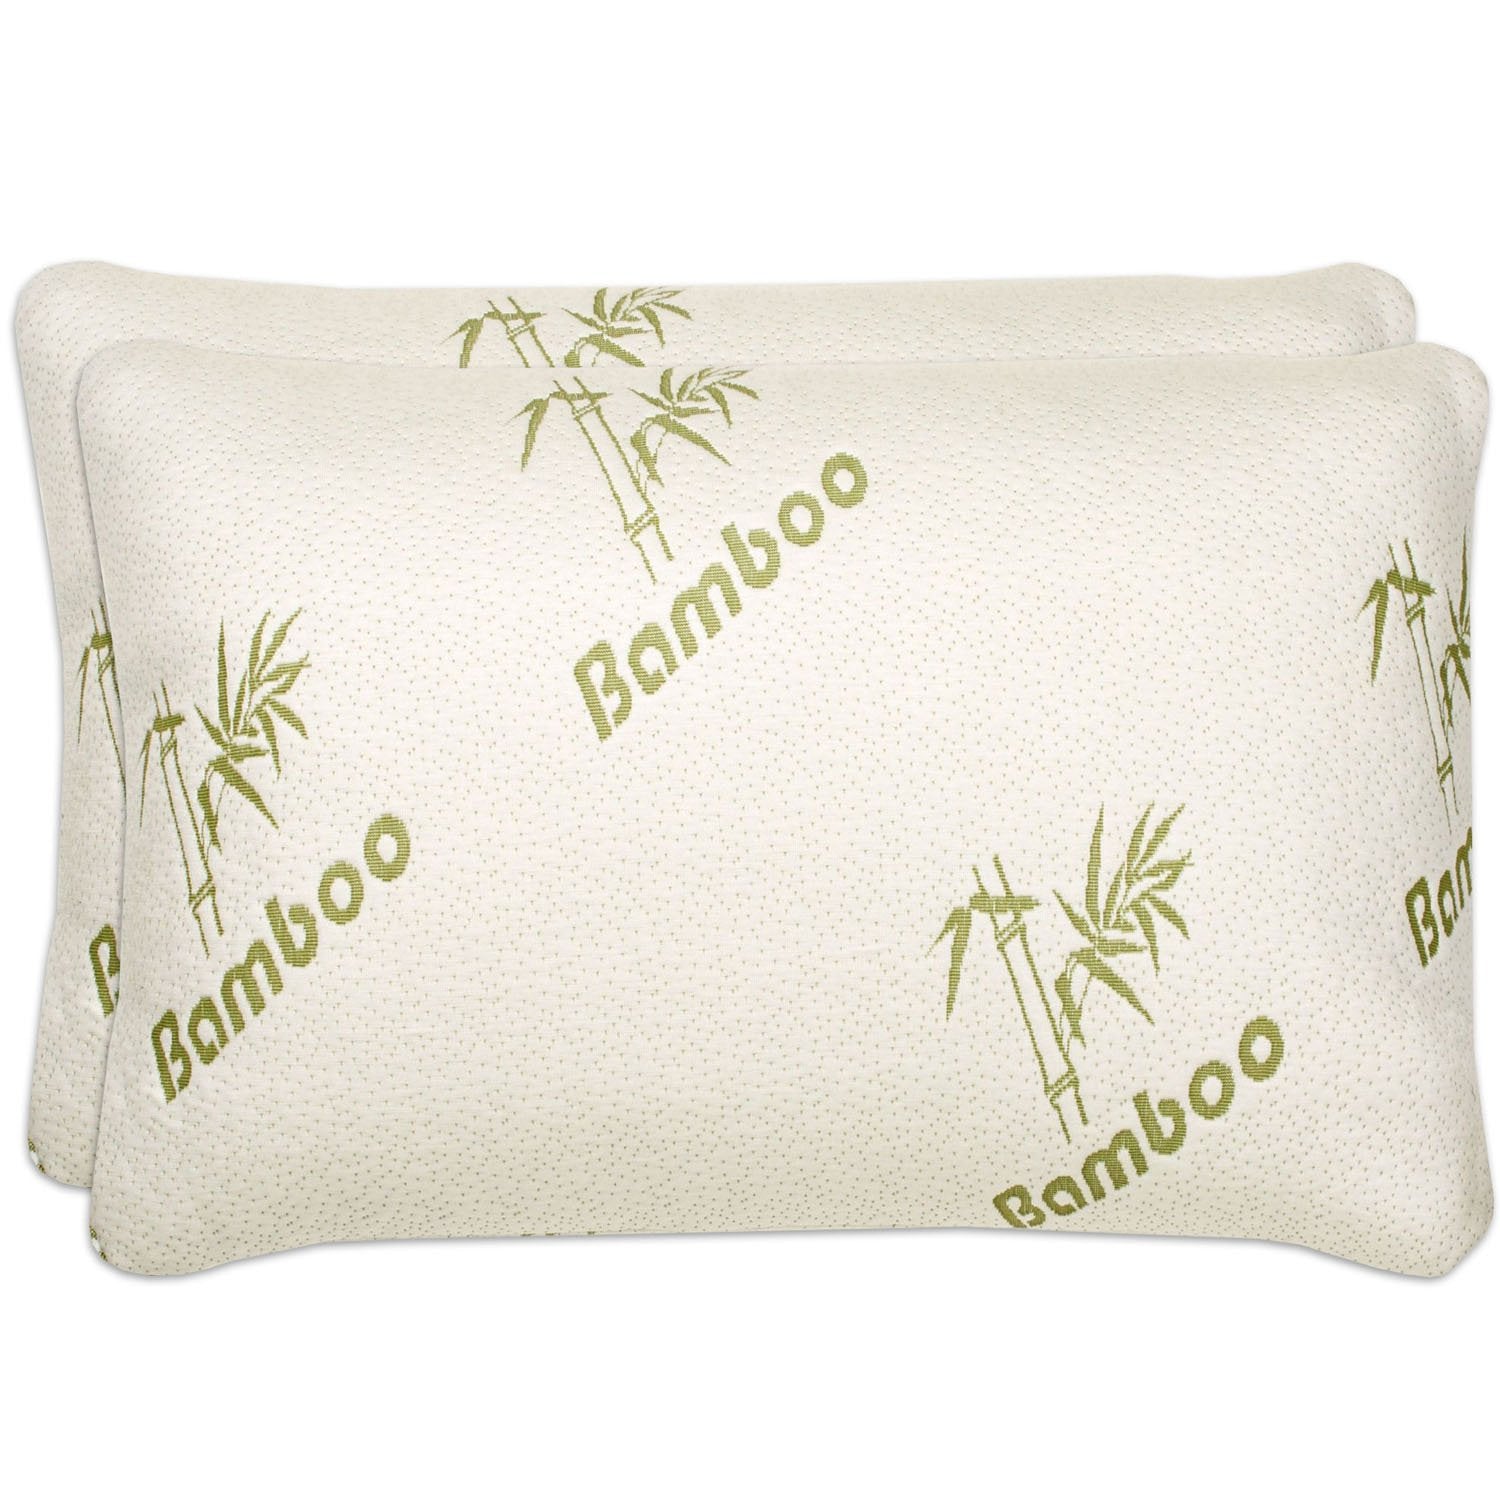 Bamboo Memory Foam Bed Pillow - Top